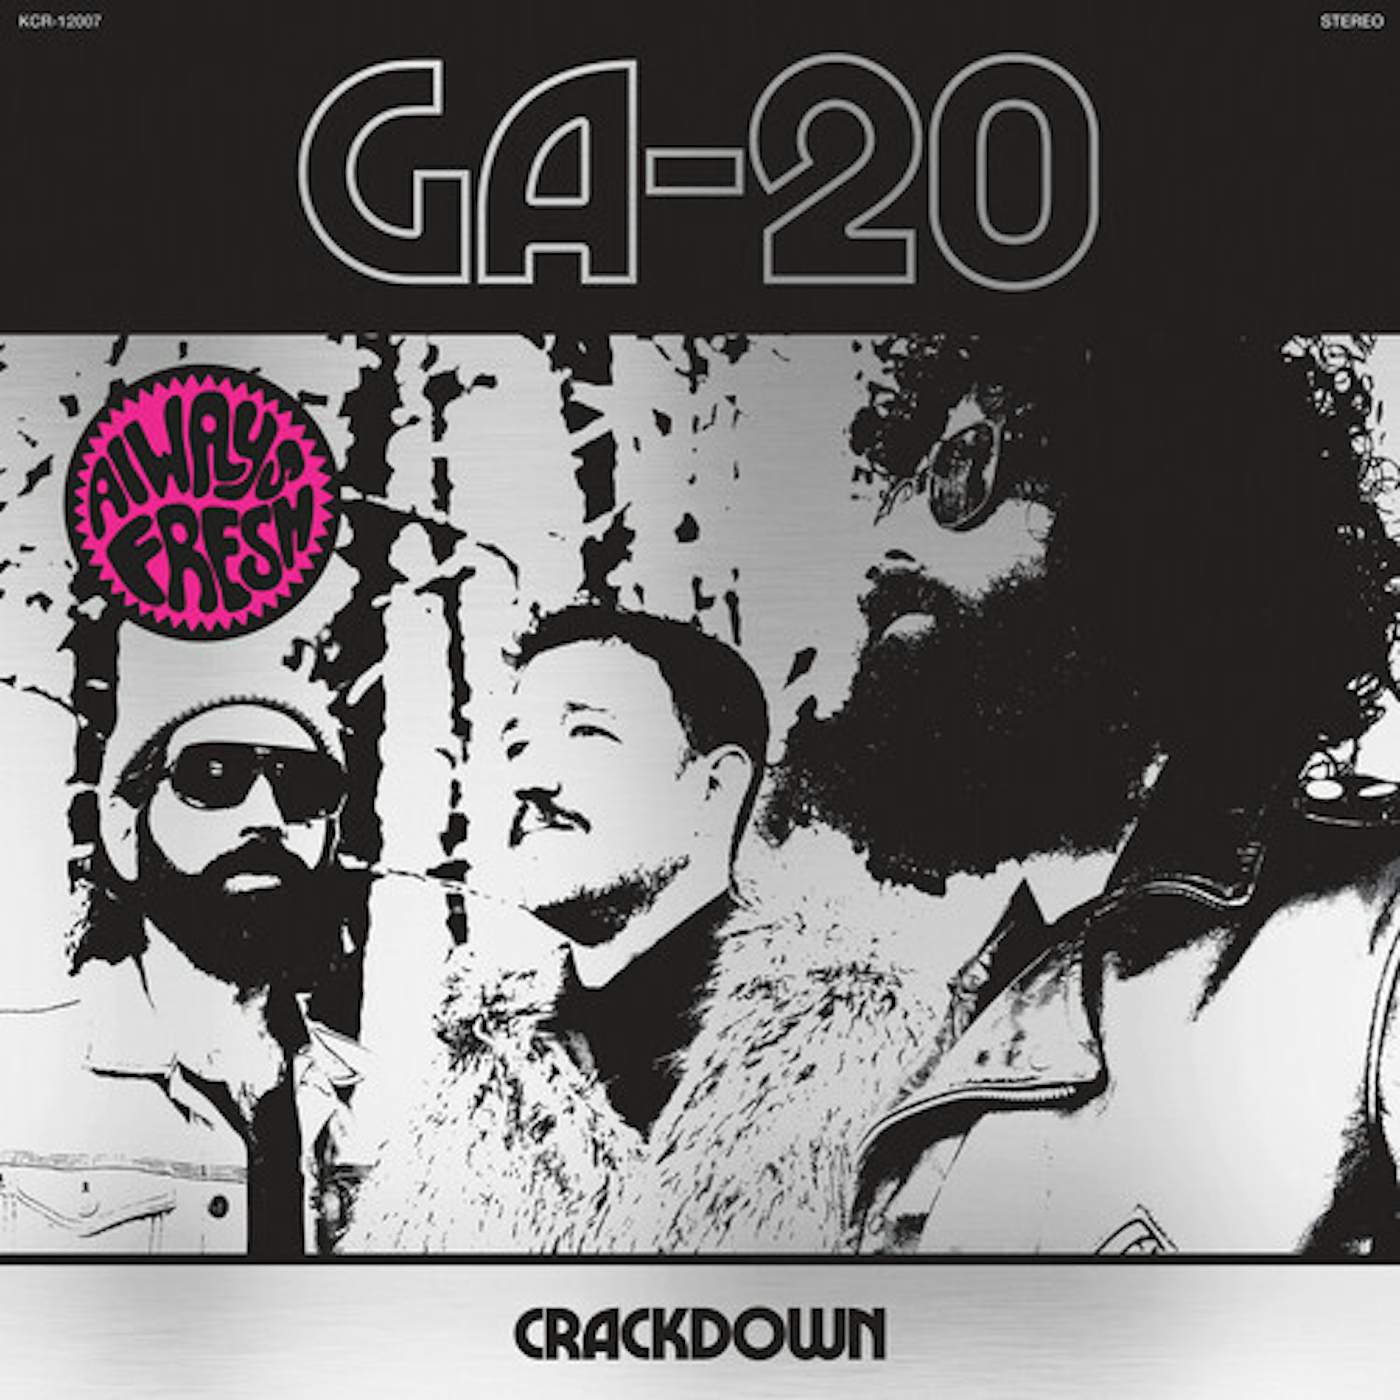 GA-20 CRACKDOWN CD